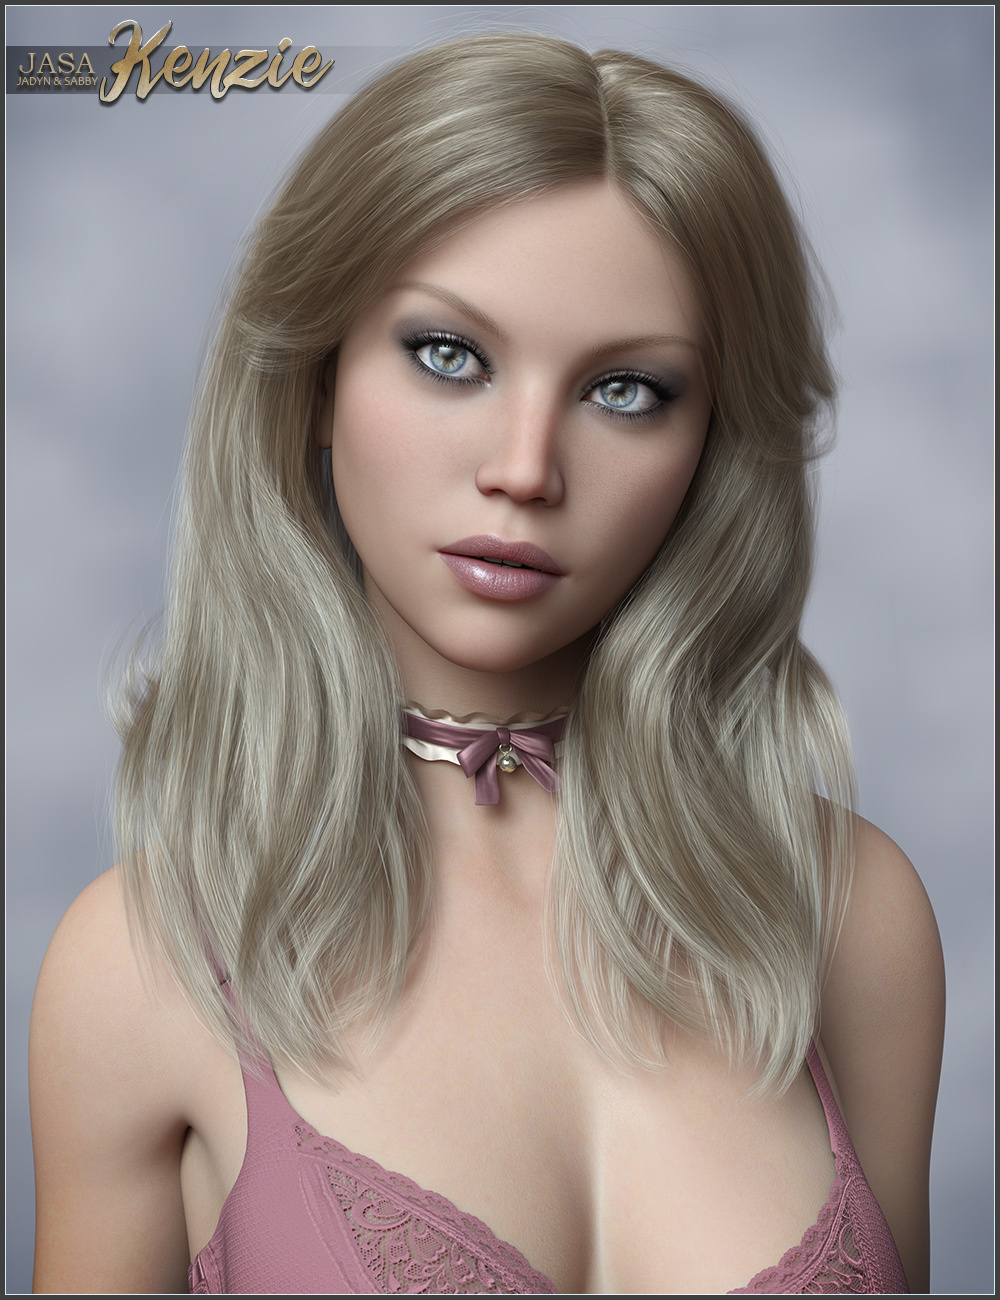 JASA Kenzie for Genesis 8 and 8.1 Females by: SabbyJadyn, 3D Models by Daz 3D